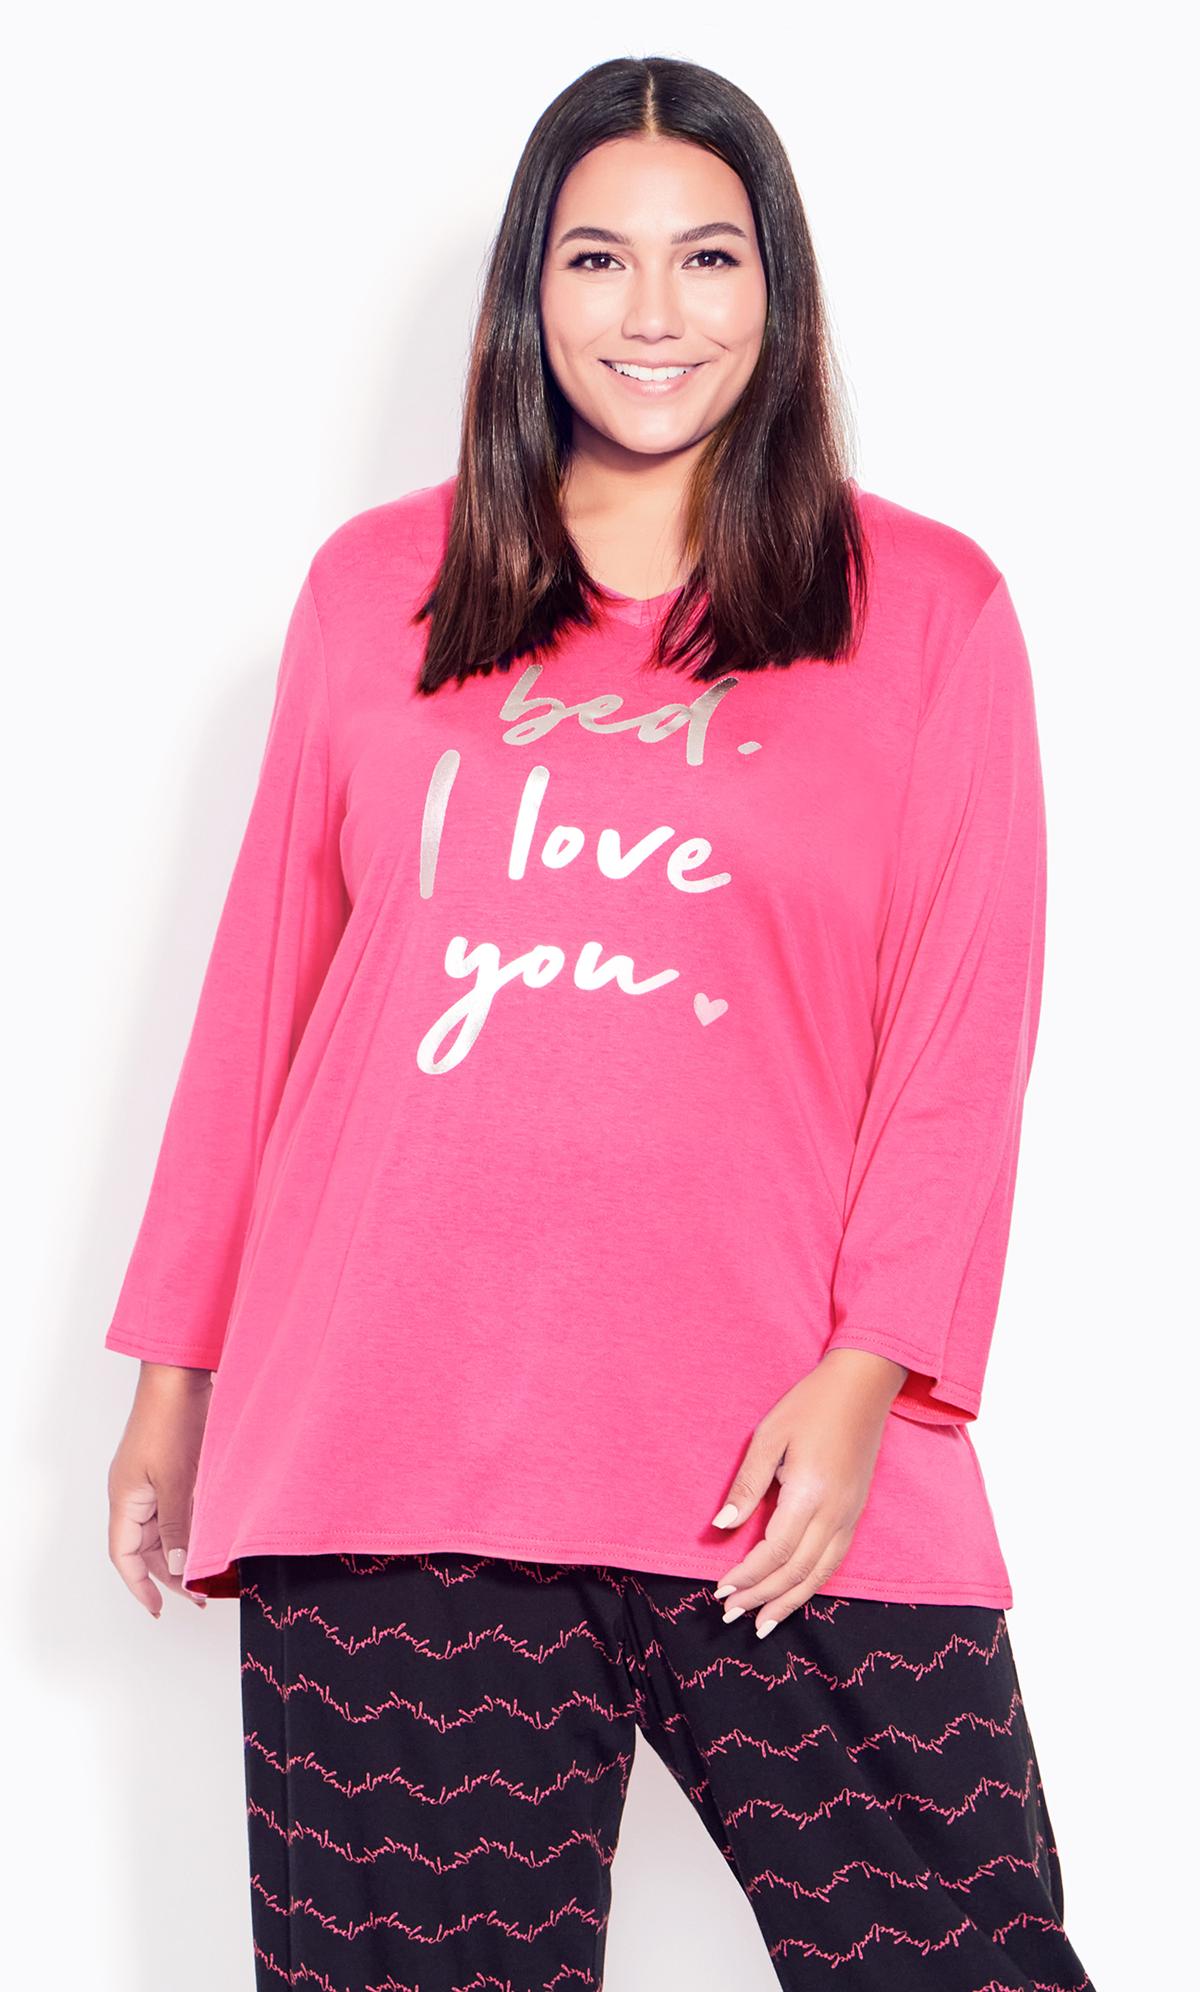 Evans Hot Pink 'Bed, I Love You' Slogan Print Pyjama Top 1